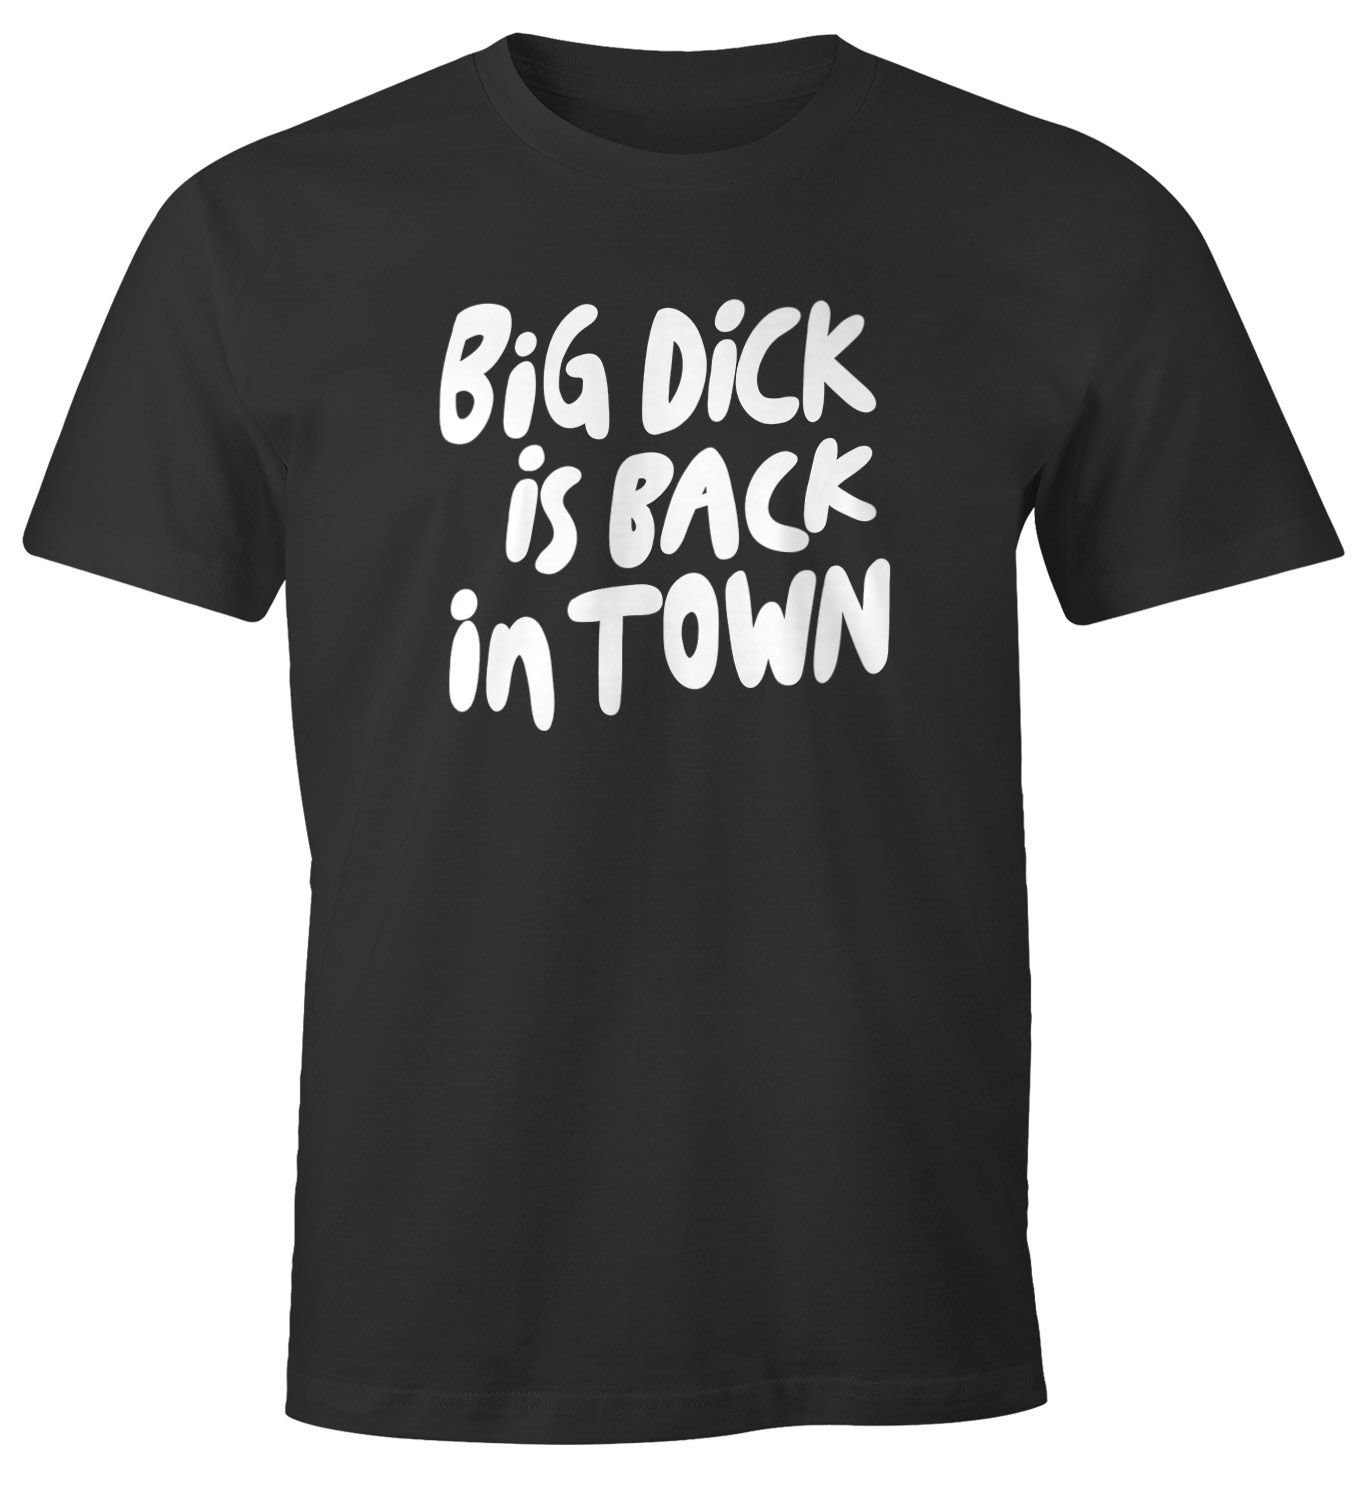 MoonWorks Print-Shirt Herren T-Shirt mit is Dick Print schwarz mit Spruch lustig Moonworks® Big Town back Ironie in Fun-Shirt